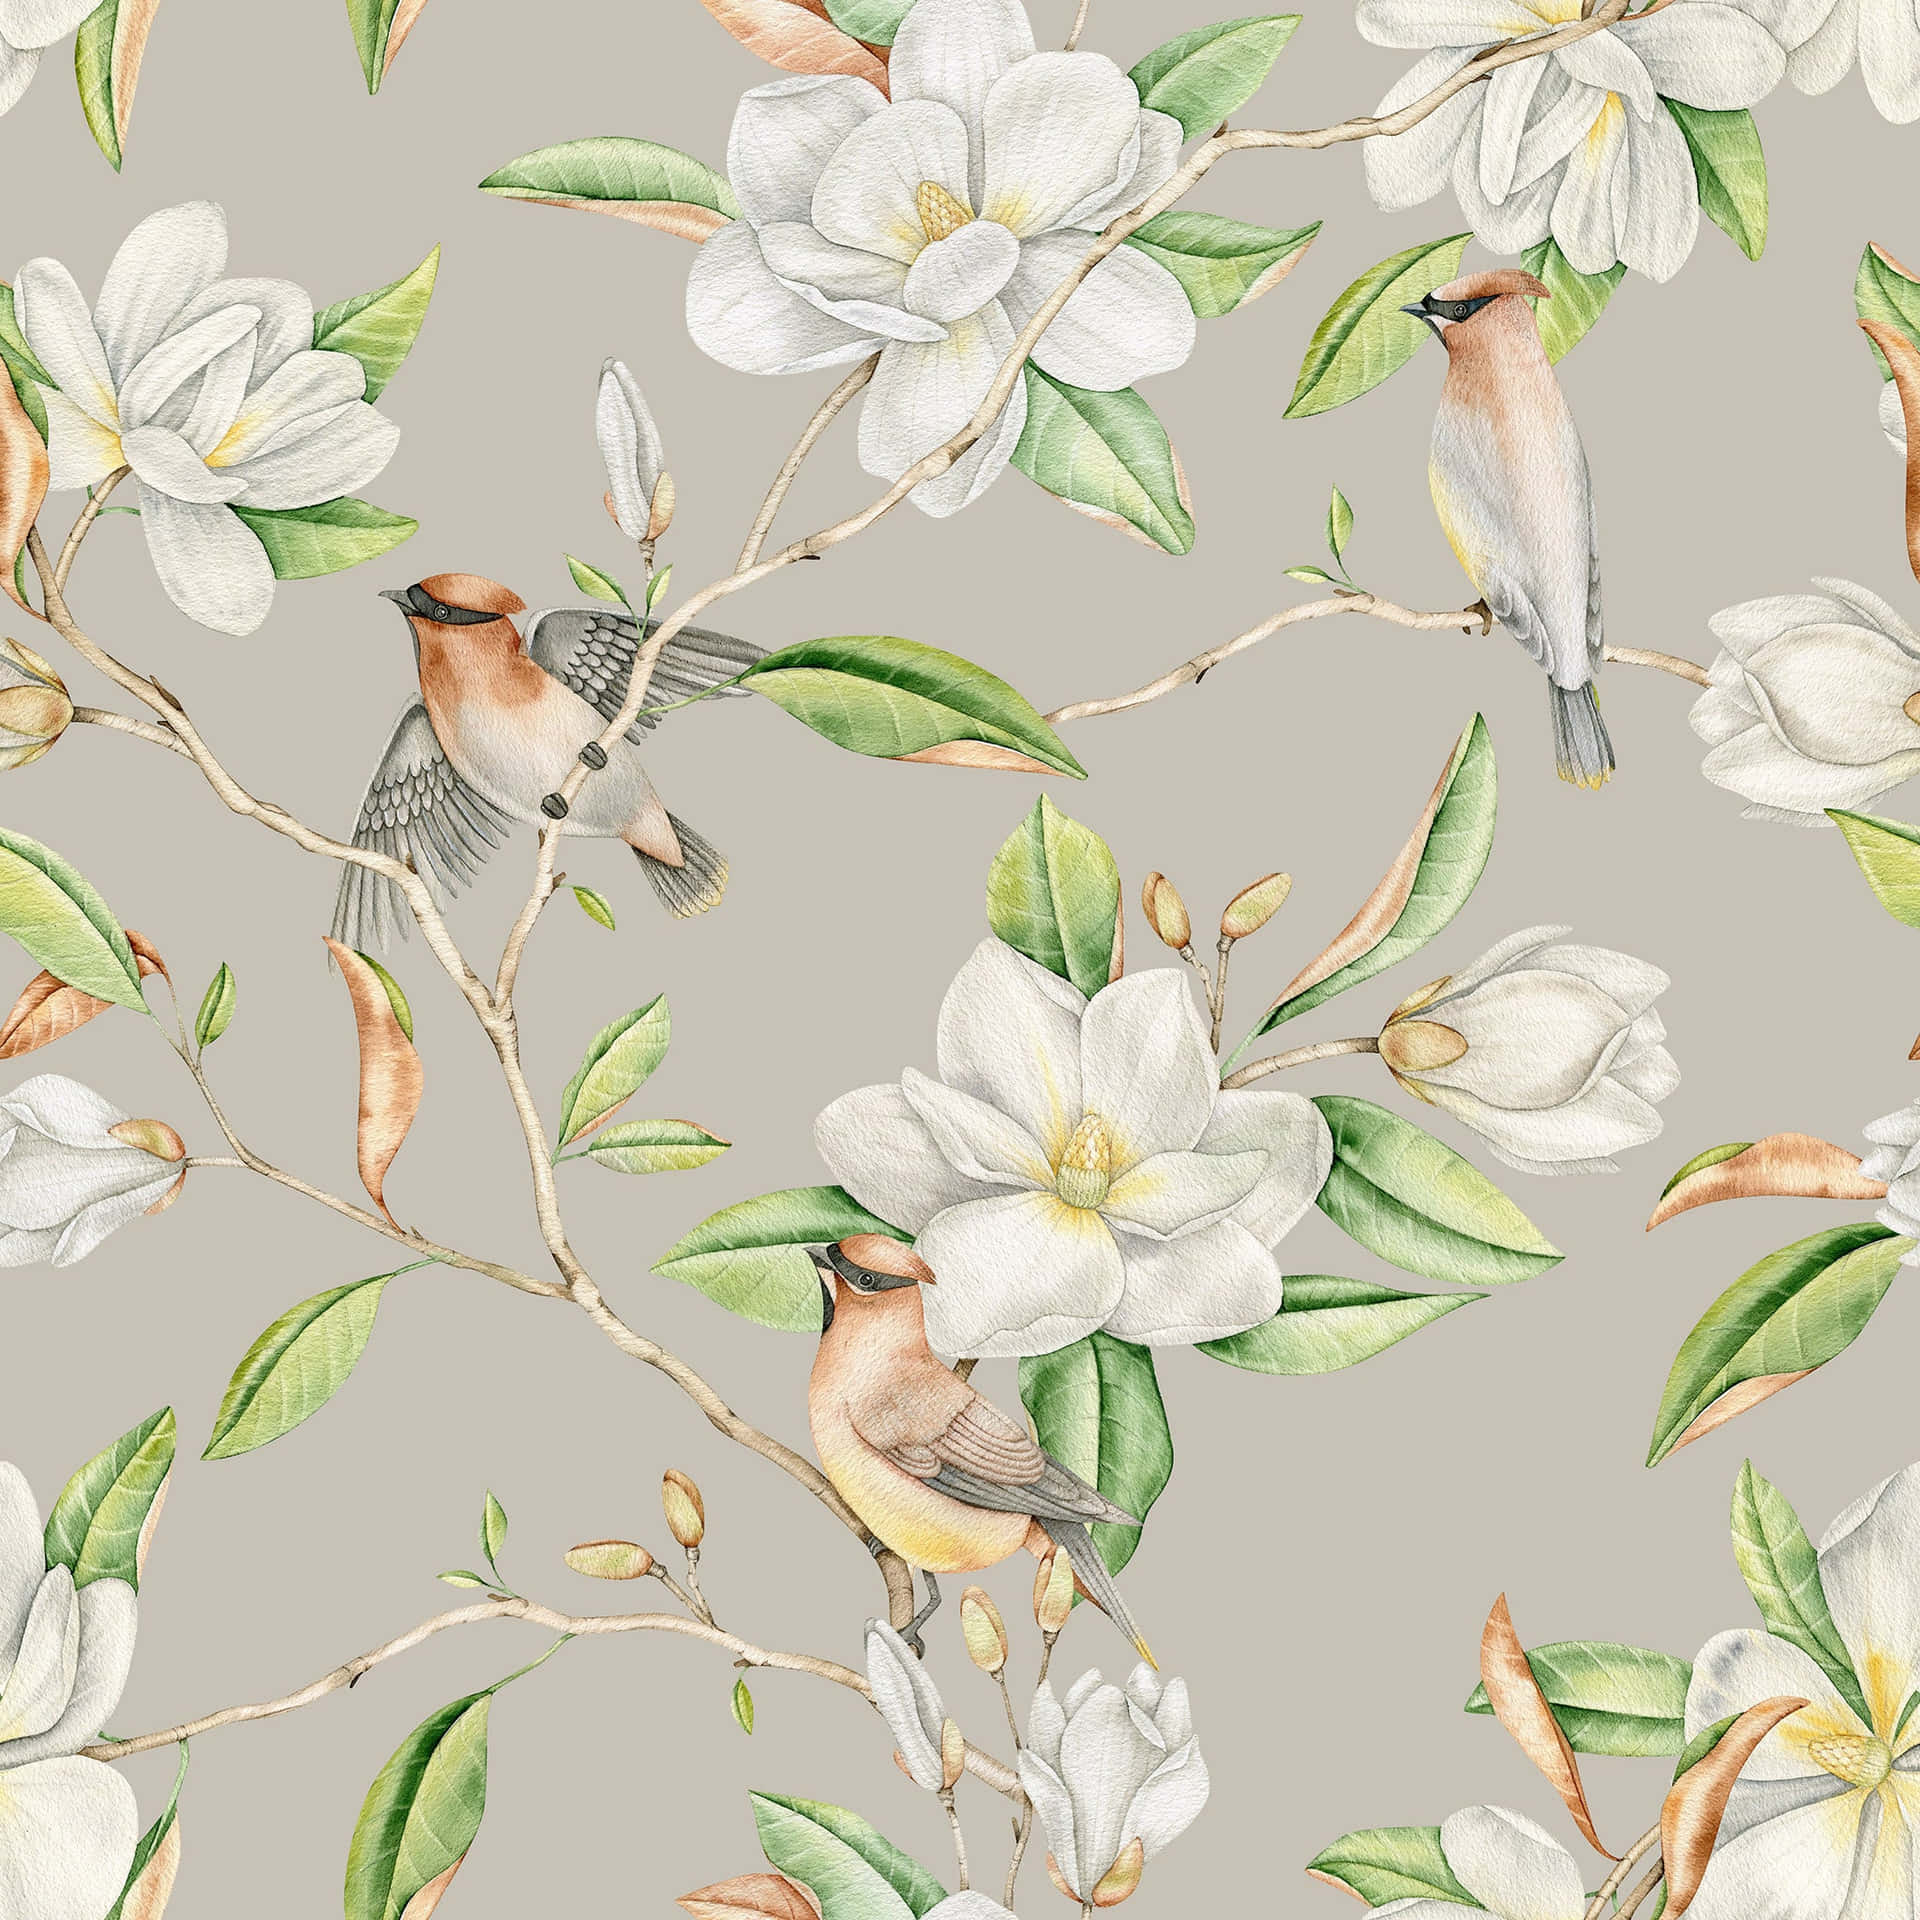 Magnolia Flower Pictures Wallpaper